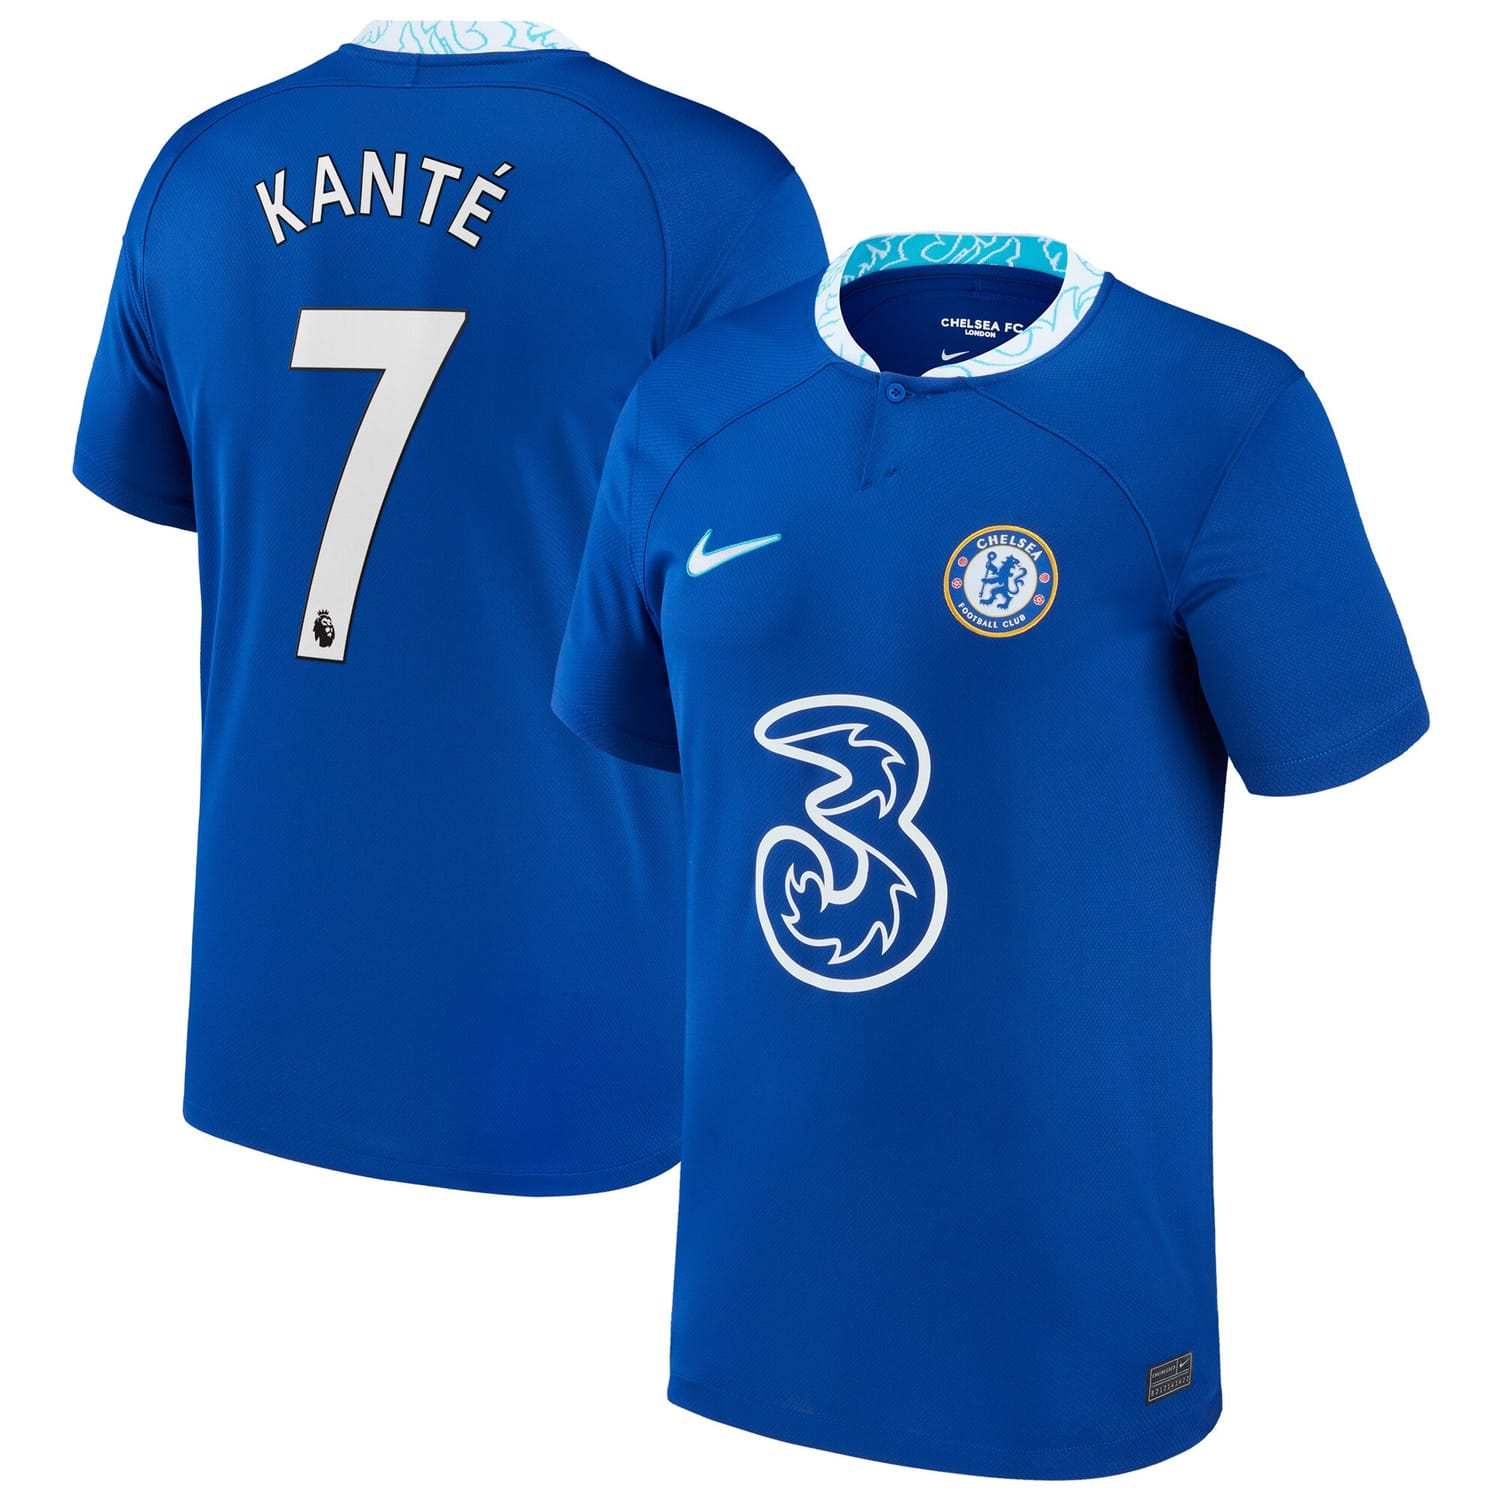 Premier League Chelsea Home Jersey Shirt Blue 2022-23 player N'Golo Kante printing for Men